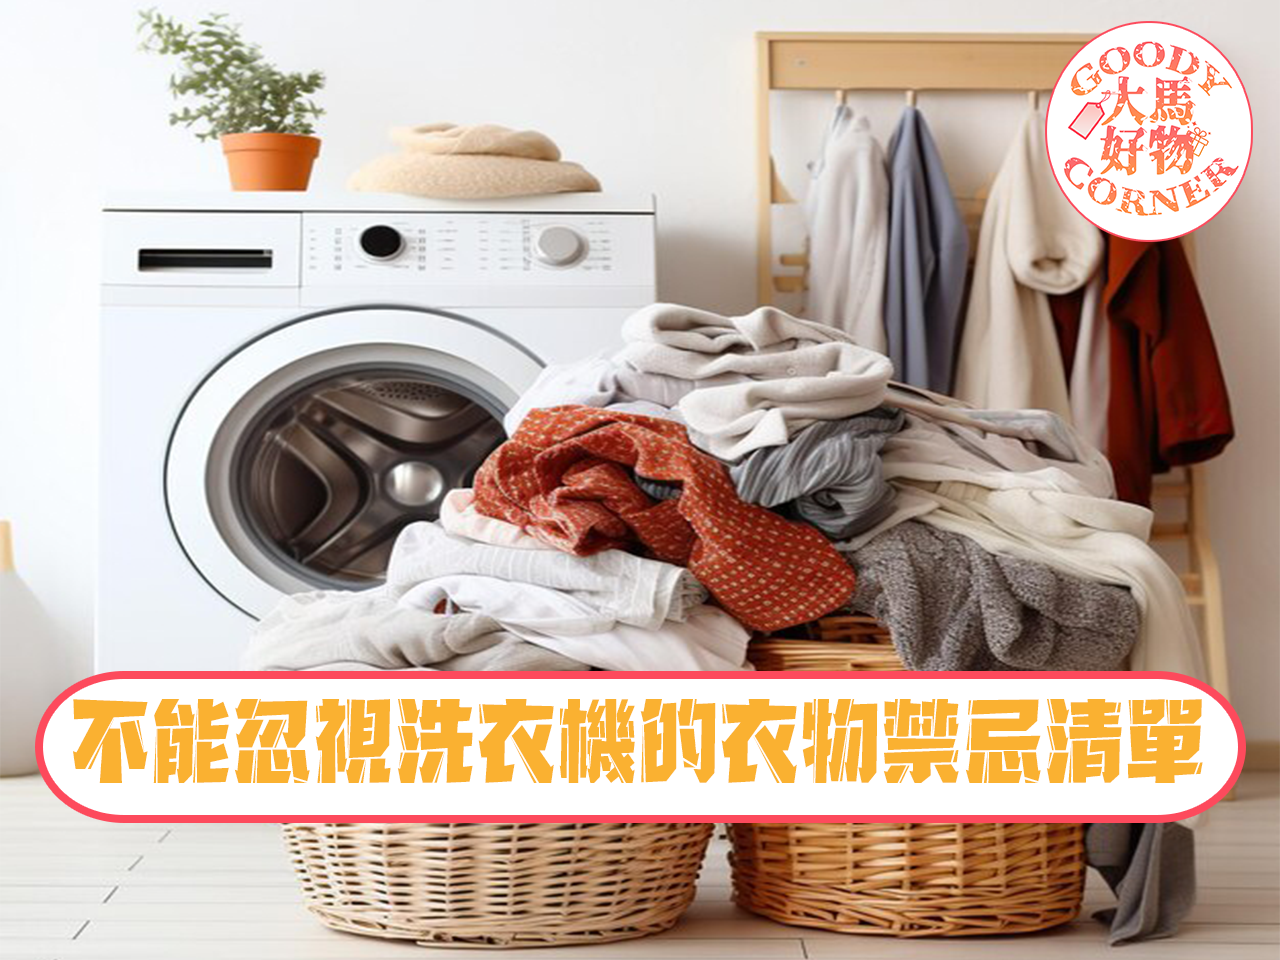 taboo list clothes washing machine